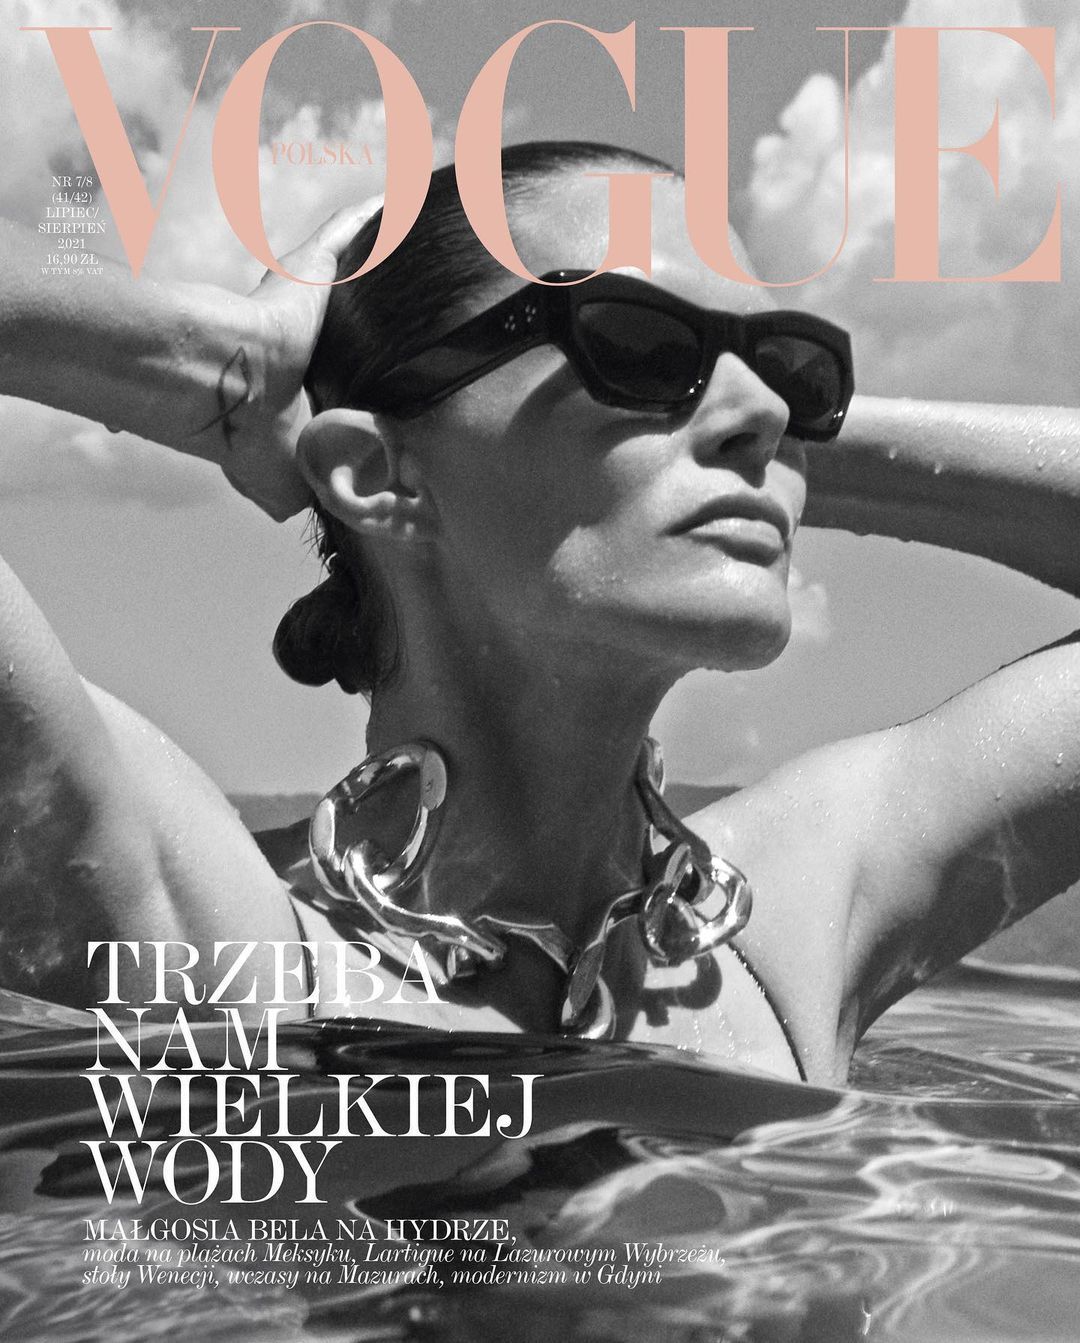 Vogue Poland January/February 2021